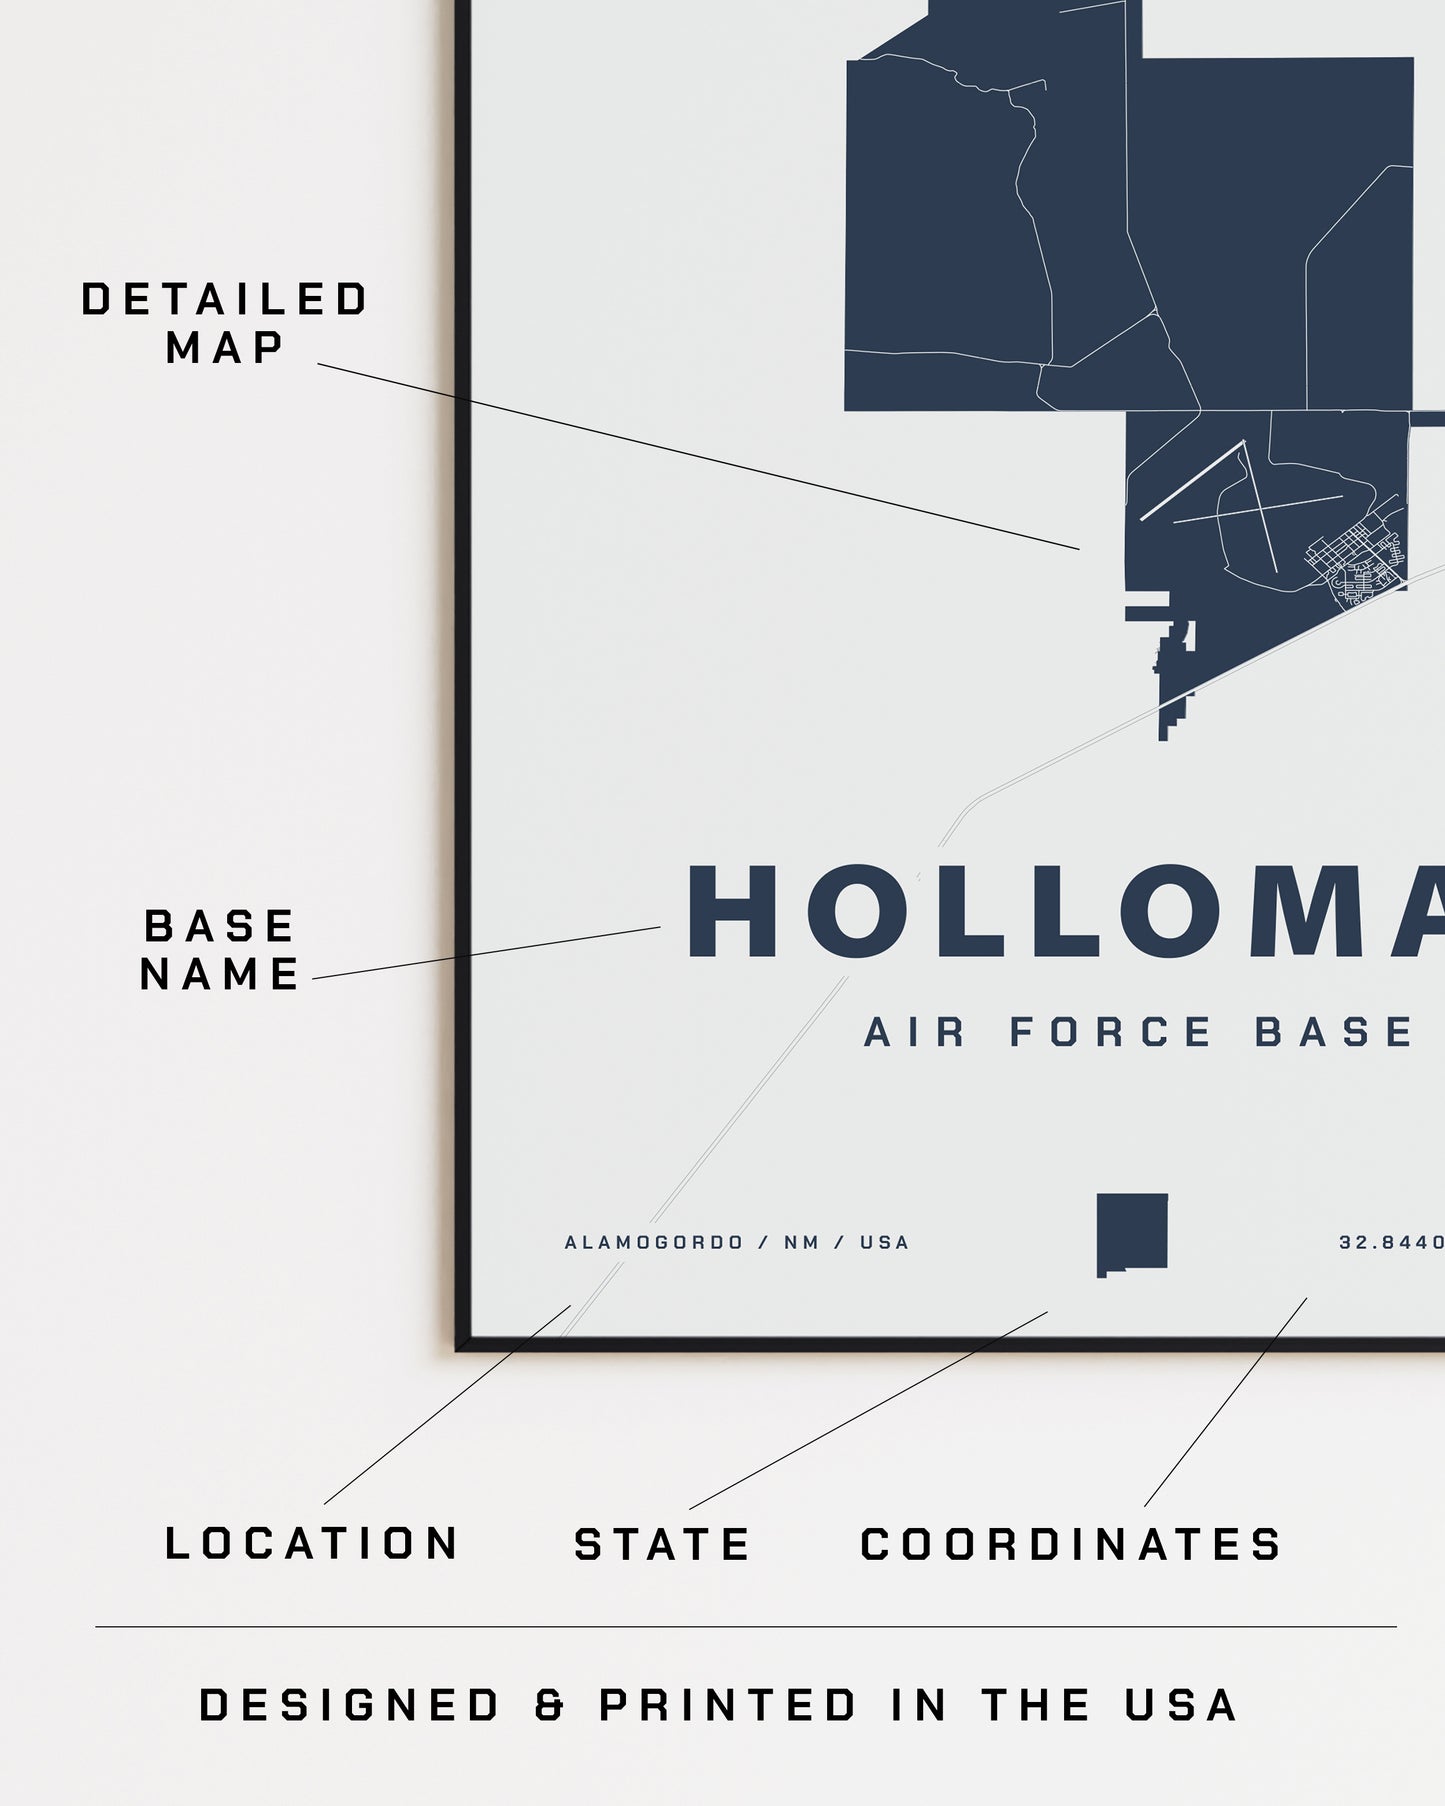 Holloman Air Force Base Map Print